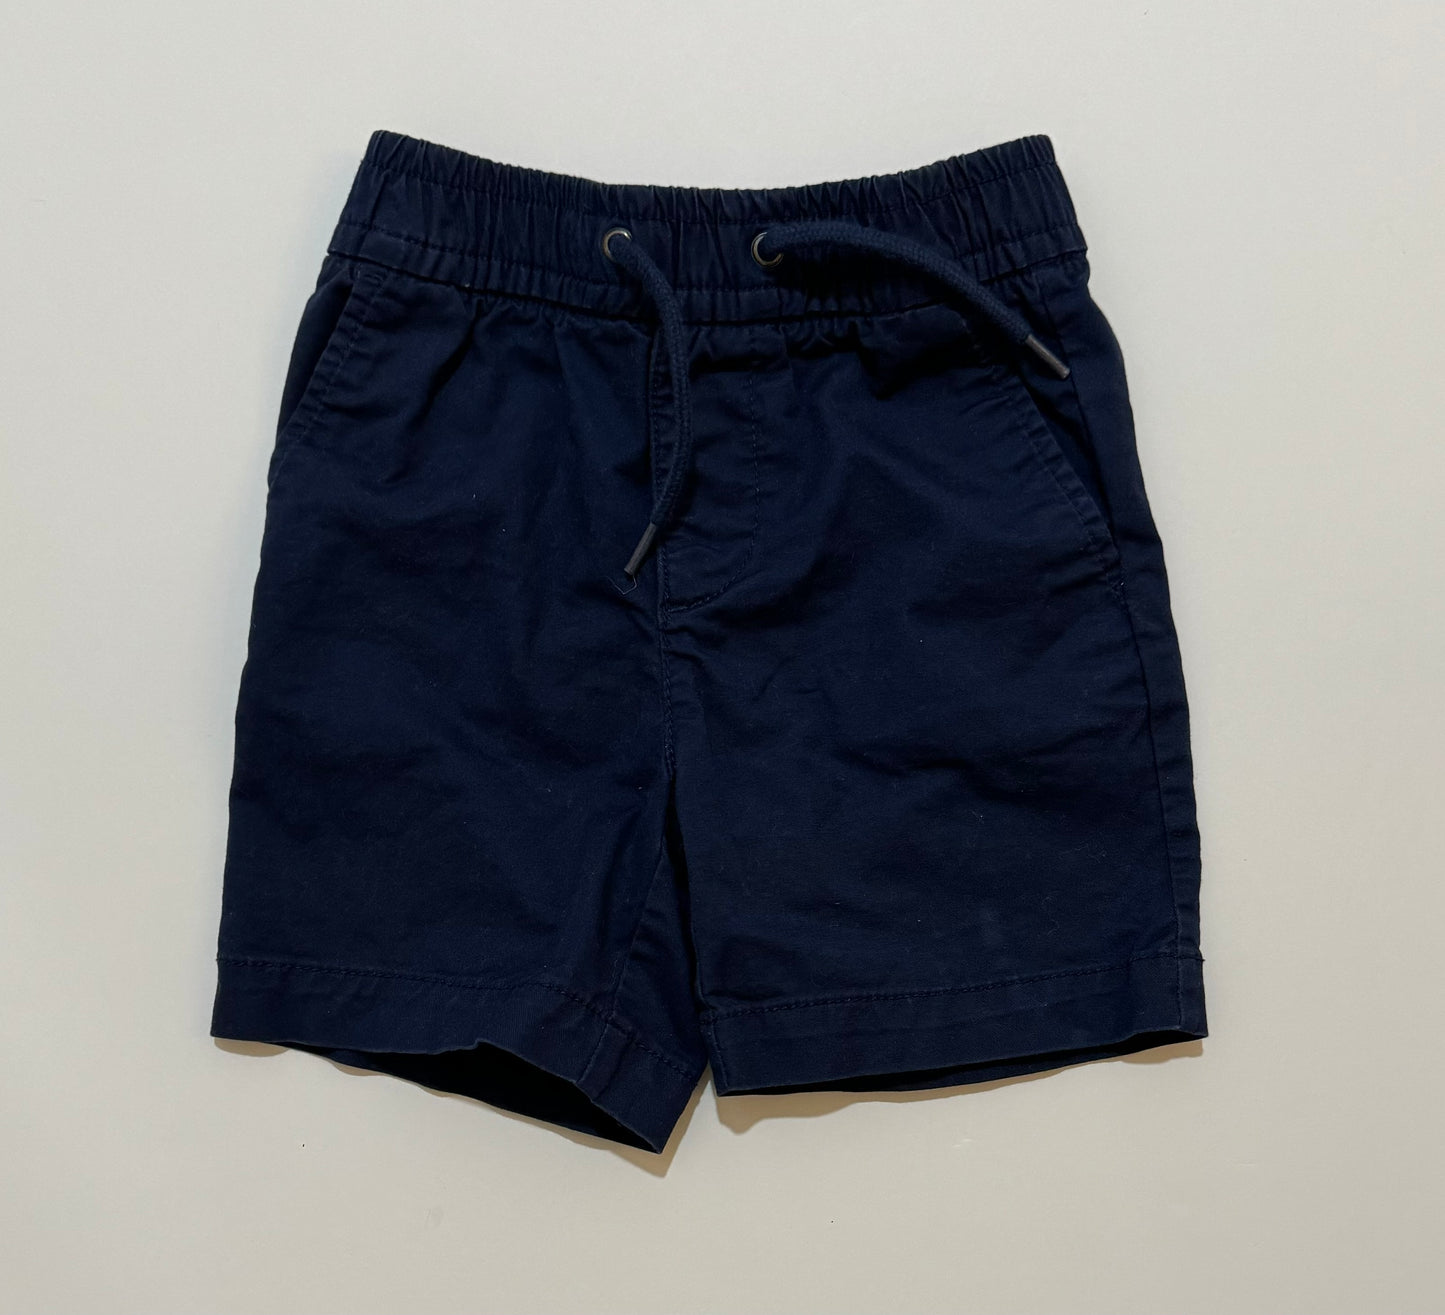 2T Boys Gap Navy Blue Shorts